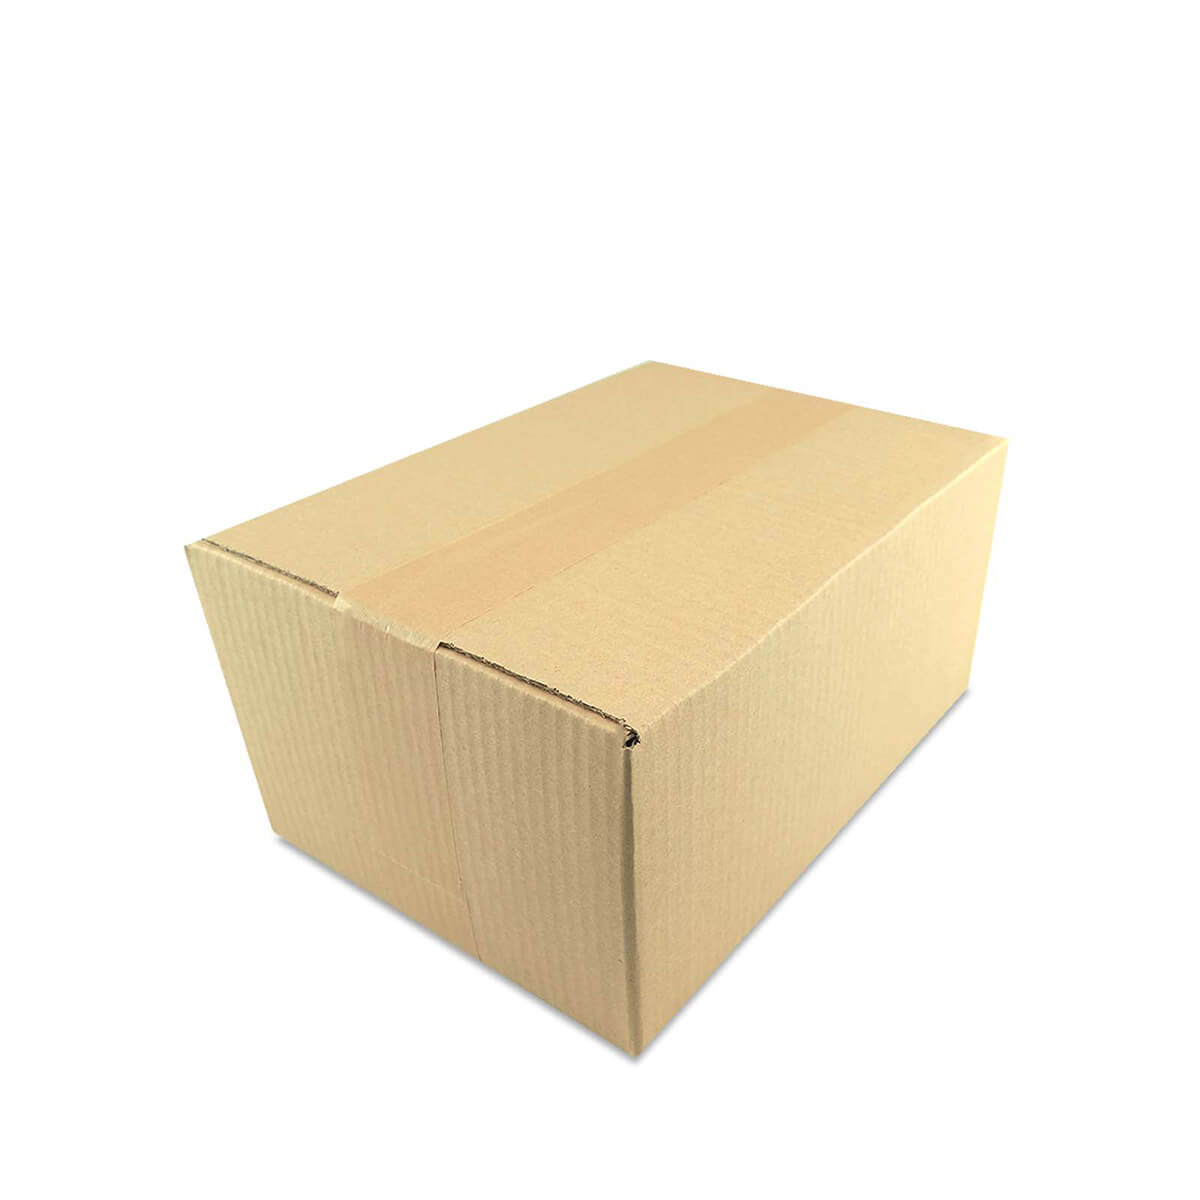 Folding carton 1-wall 650 x 350 x 370 mm - kk 129